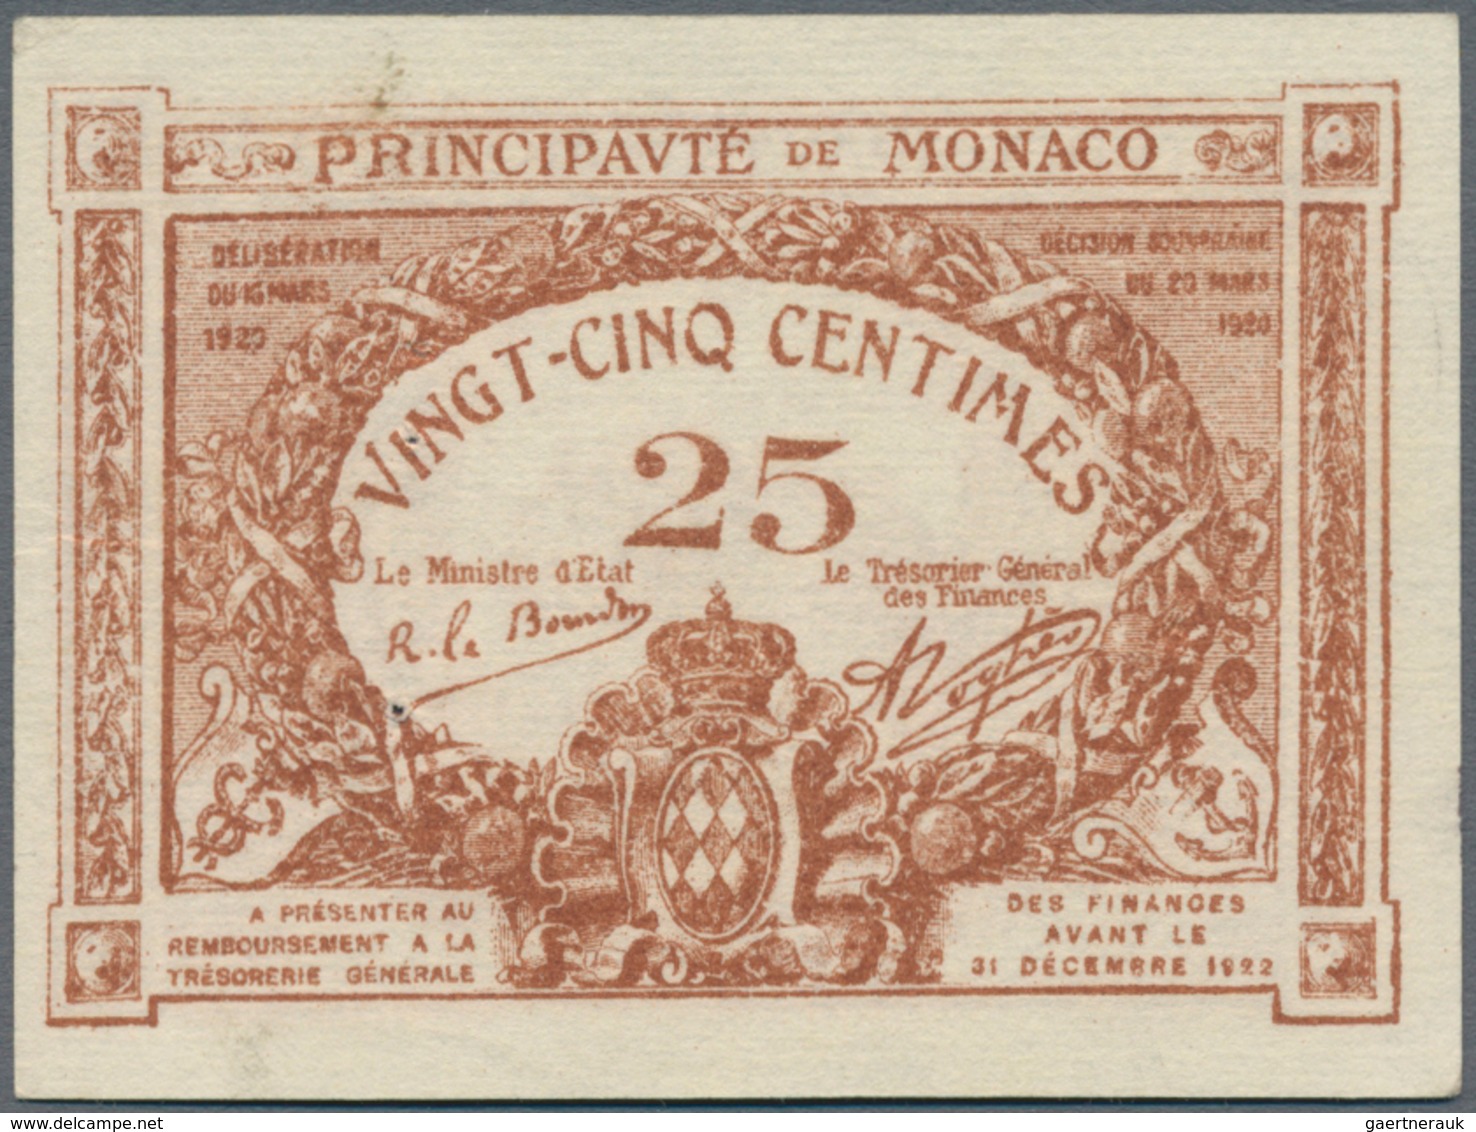 Monaco: Principauté De Monaco 25 Centimes 1920, P.1a, Almost Perfect Condition, Completely Unfolded, - Mónaco